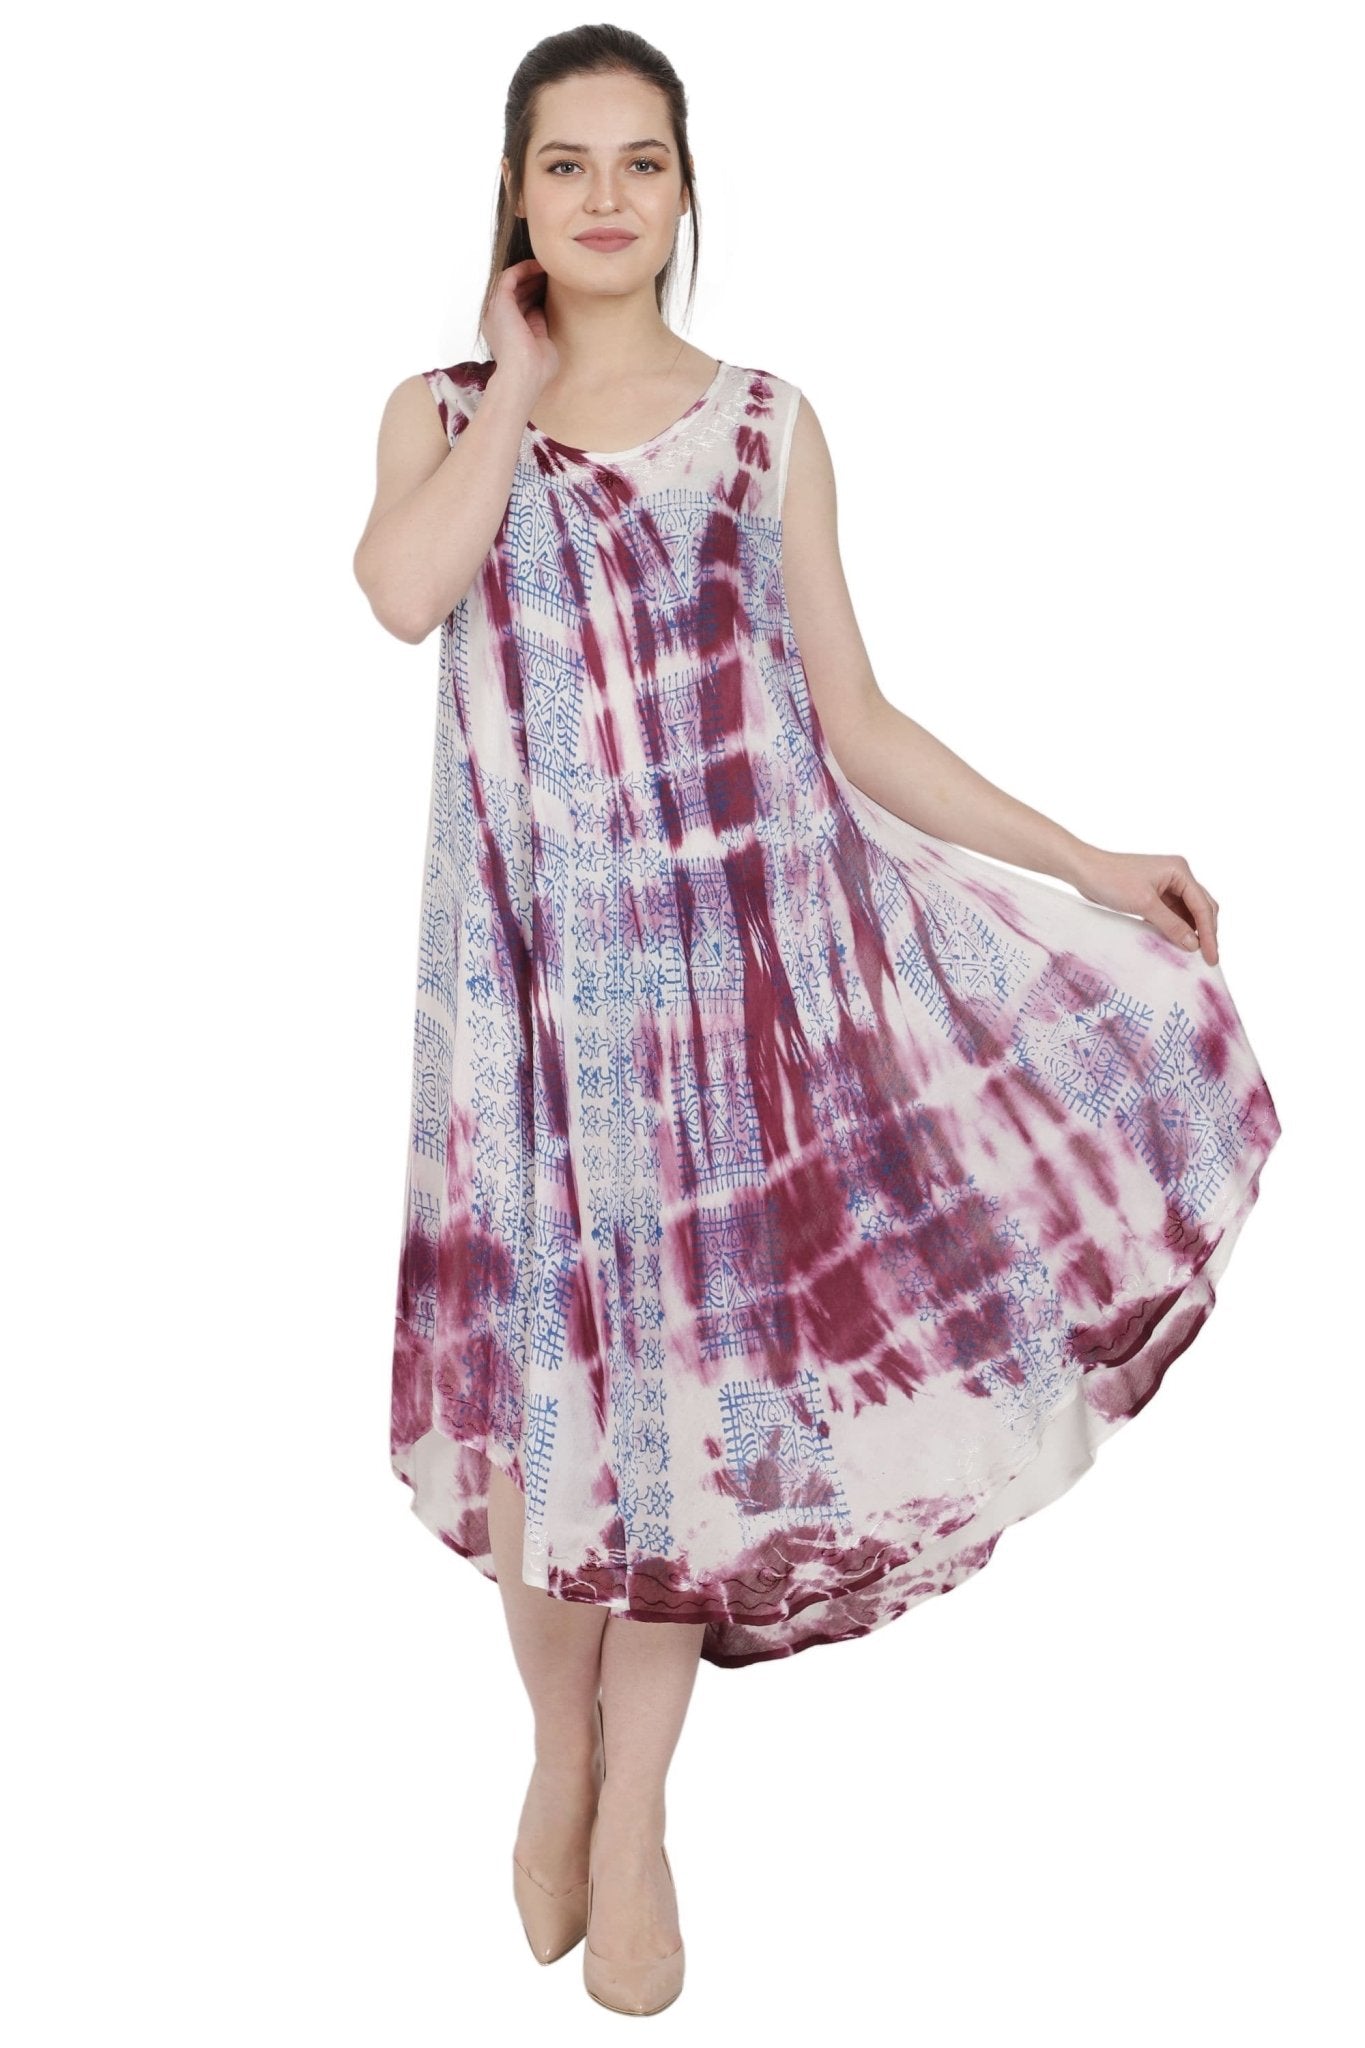 Block Print Tie Dye House Umbrella Dress UD48-2309 - Advance Apparels Inc